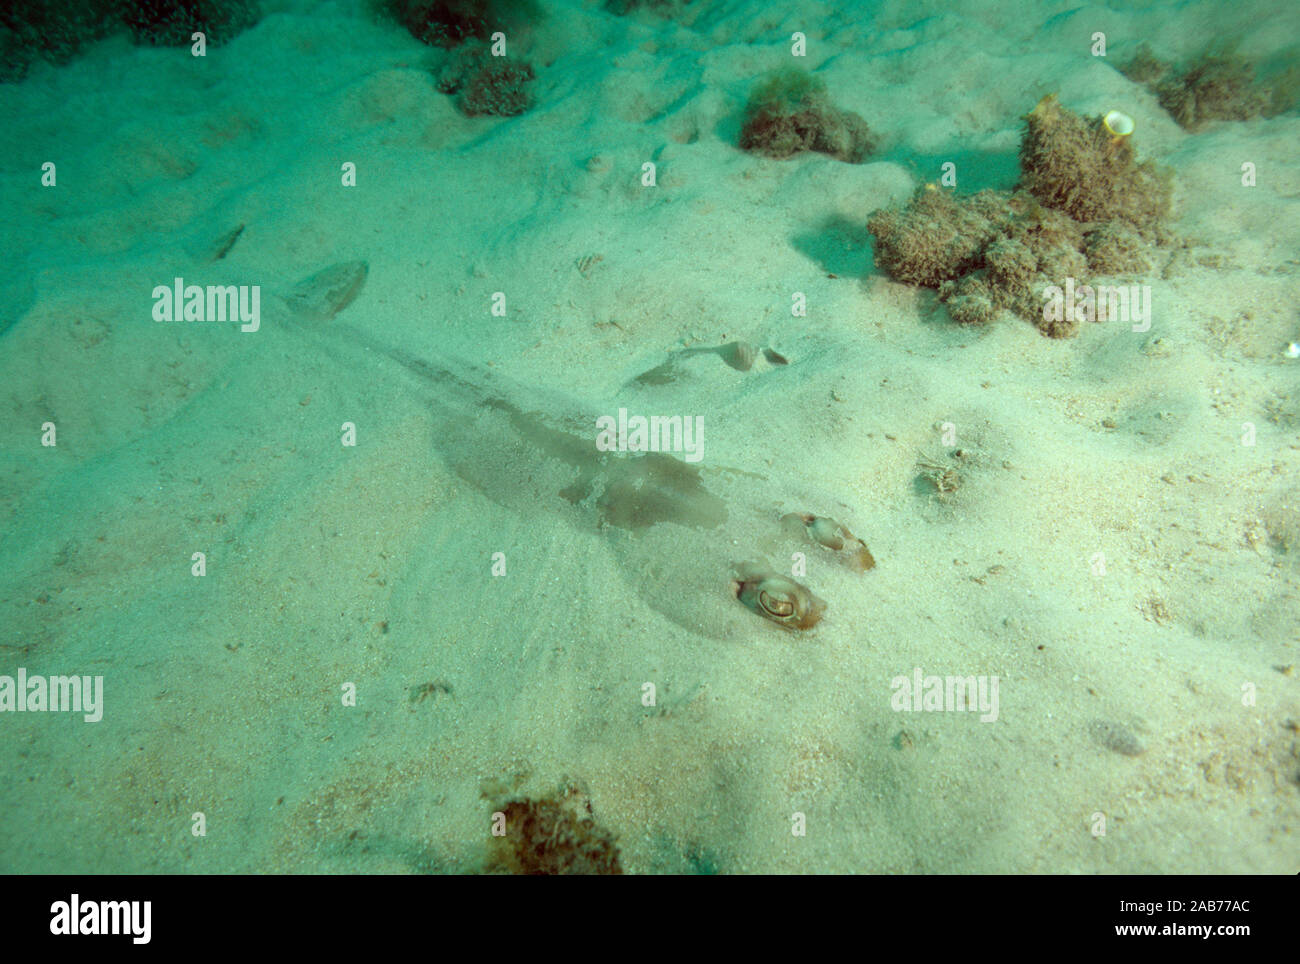 Eastern shovelnose ray (Aptychotrema rostrata), buried in sea floor sand. North coast New South Wales, Australia Stock Photo